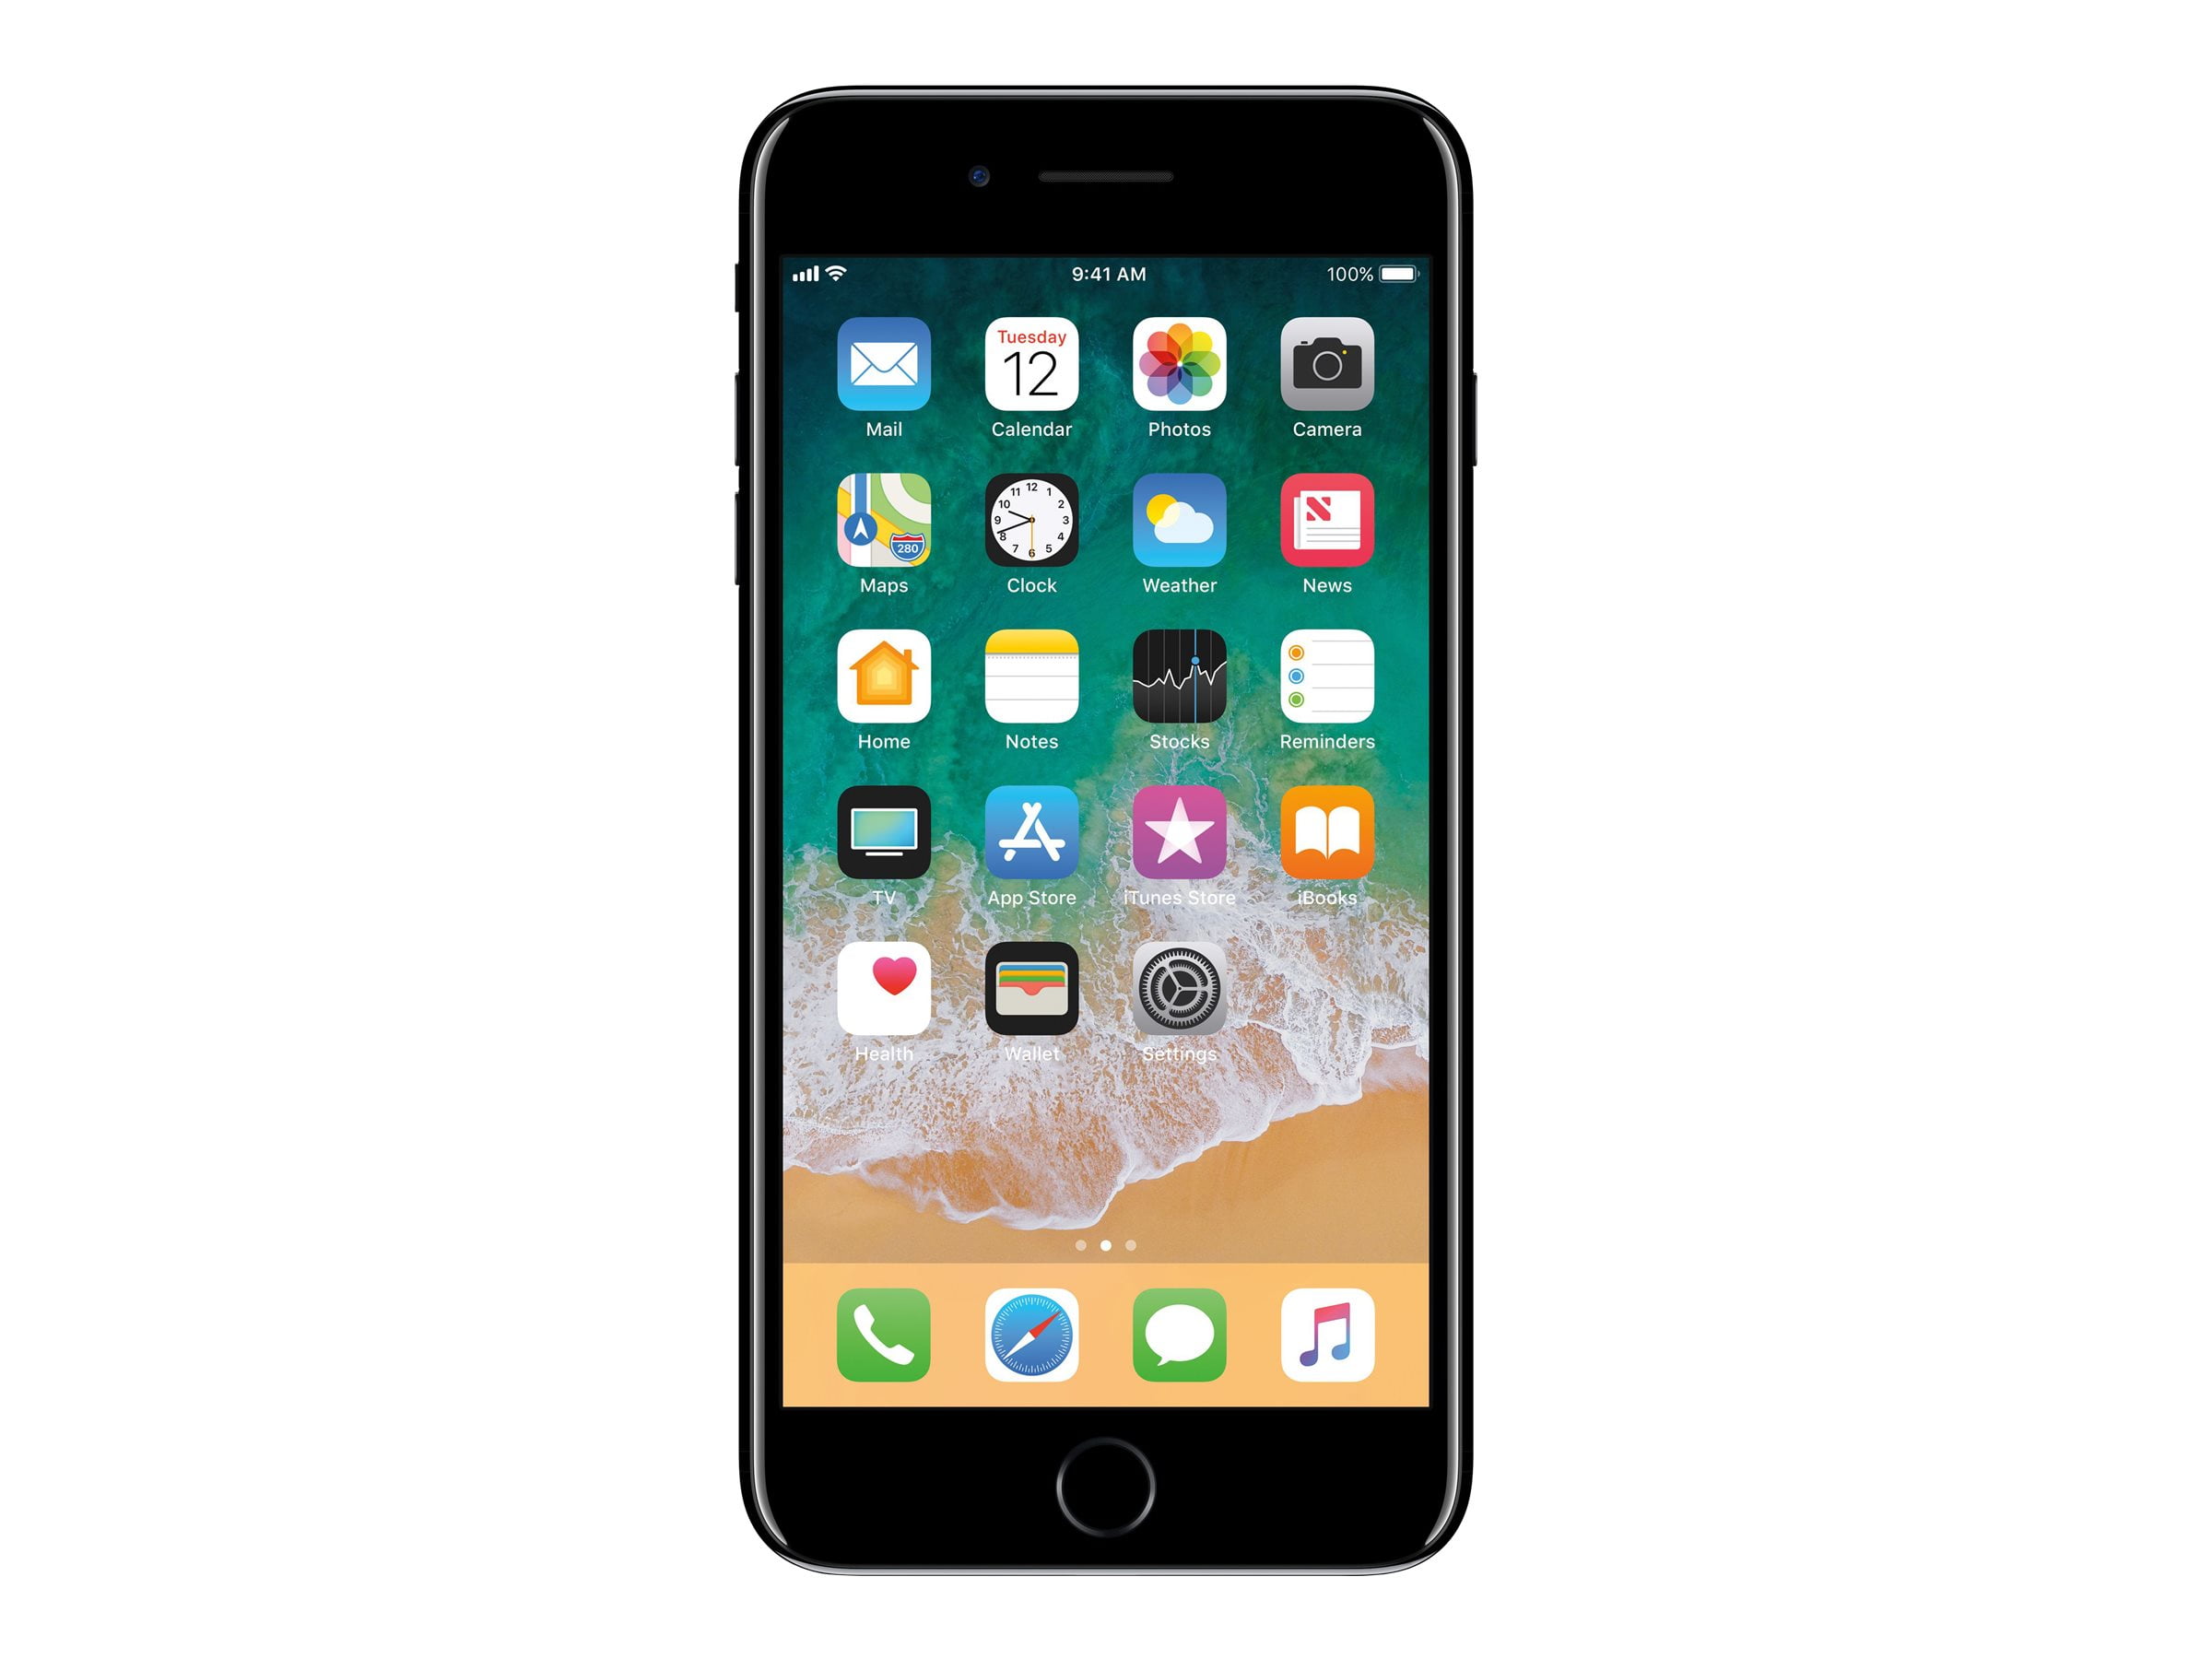 iPhone 7 Plus 32GB Jet Black (SIM-free) - Walmart.com